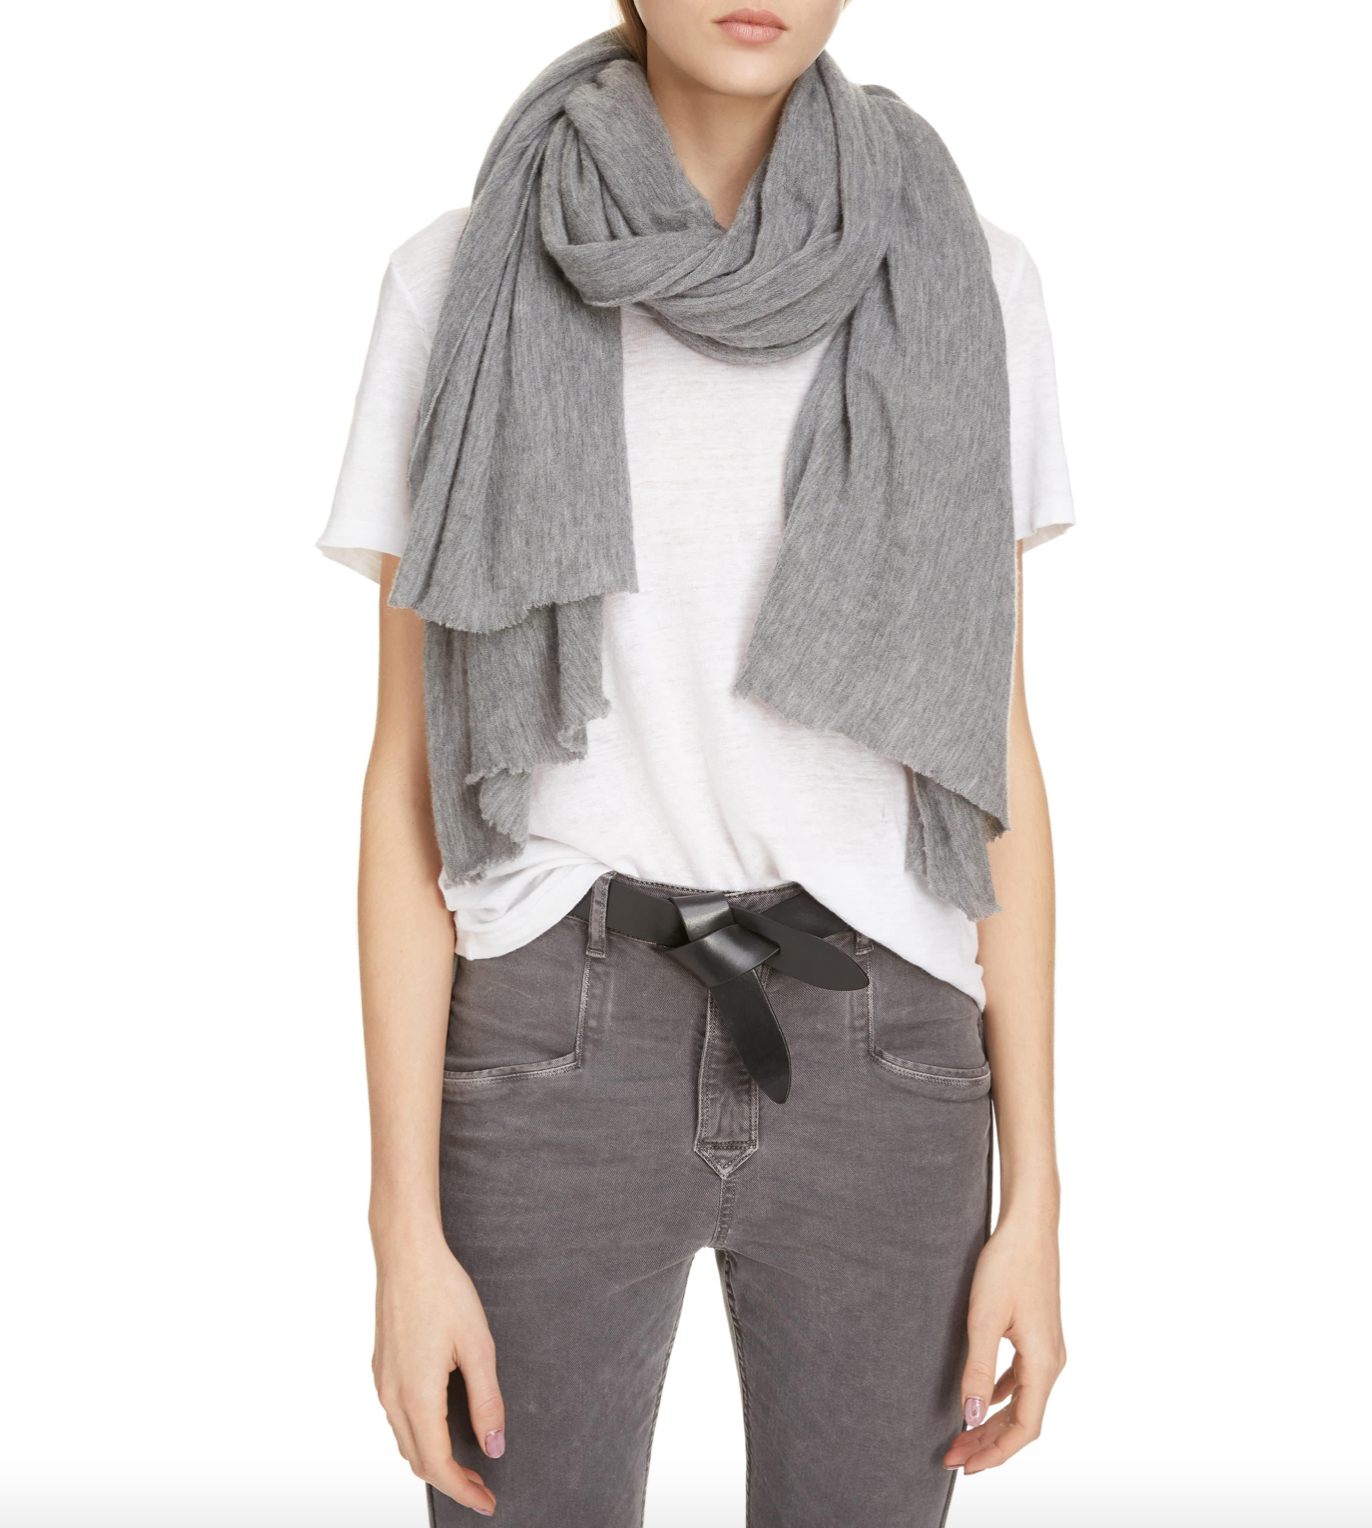 Zephyr scarf, light grey